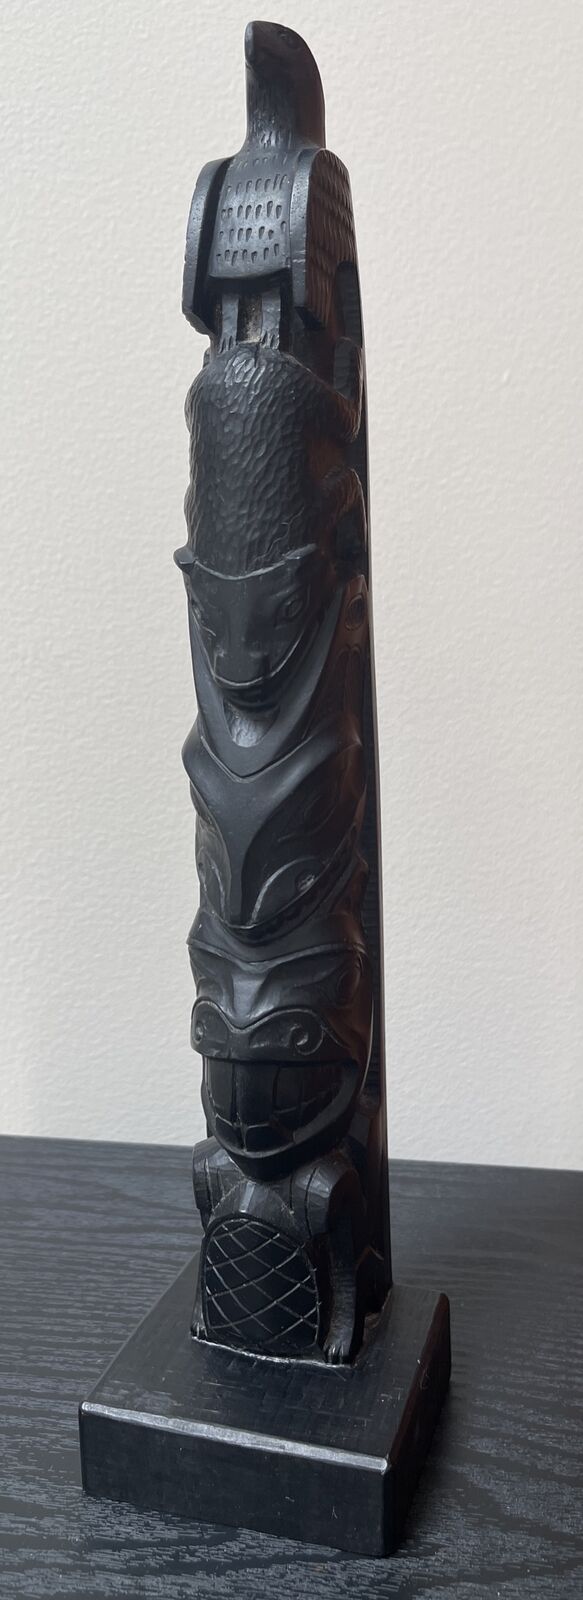 VTG Haida Black Resin Totem Pole Boma Canada Great Details 12.5” H VERY NICE